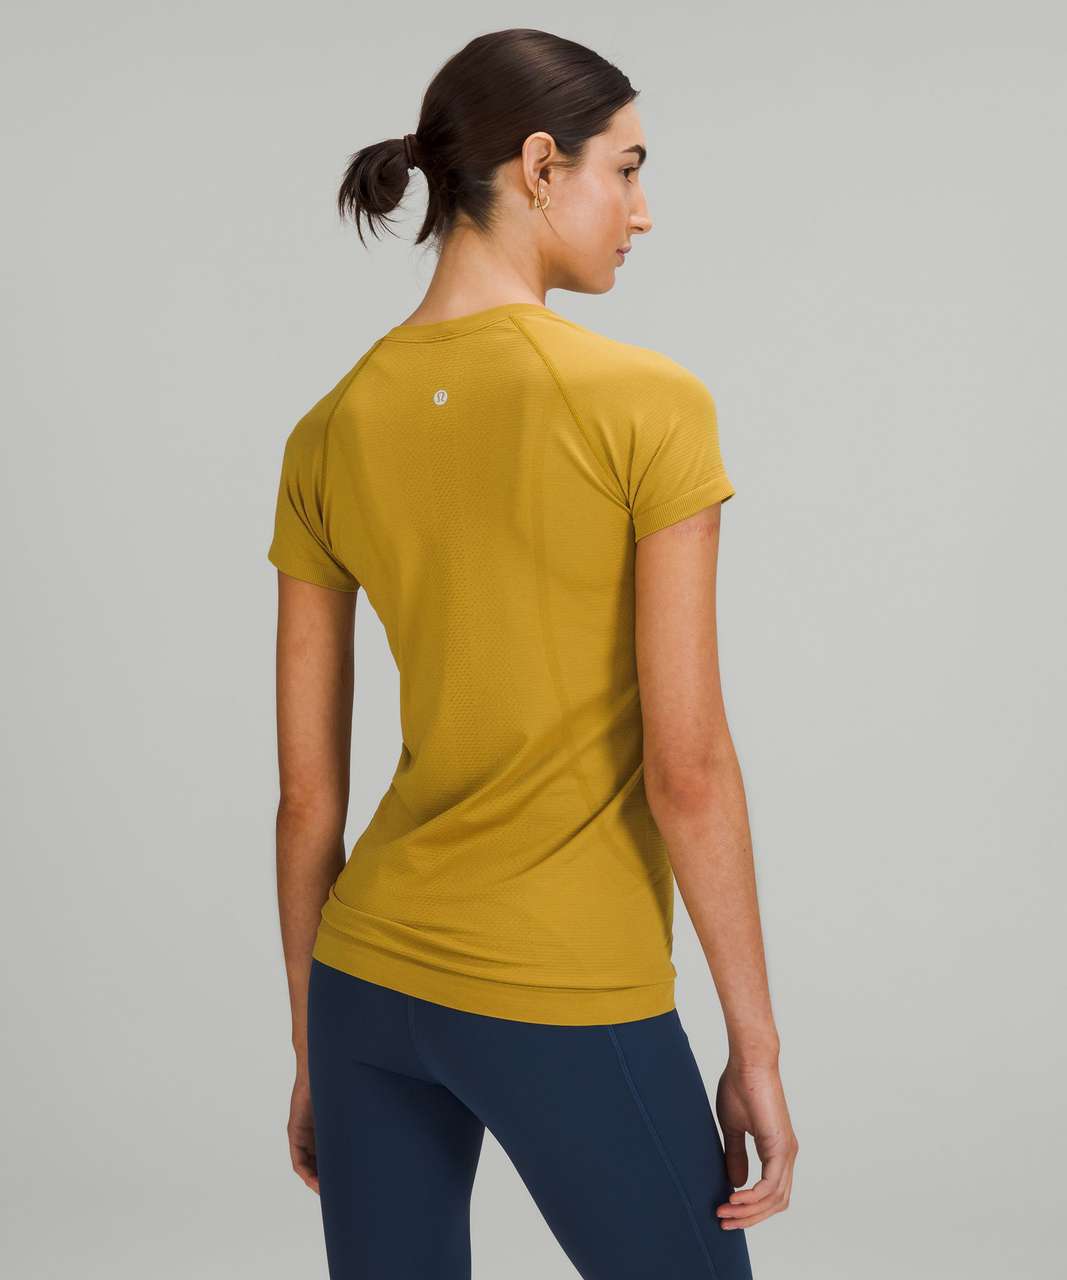 Lululemon Swiftly Tech Short Sleeve Shirt 2.0 - Auric Gold / Auric Gold